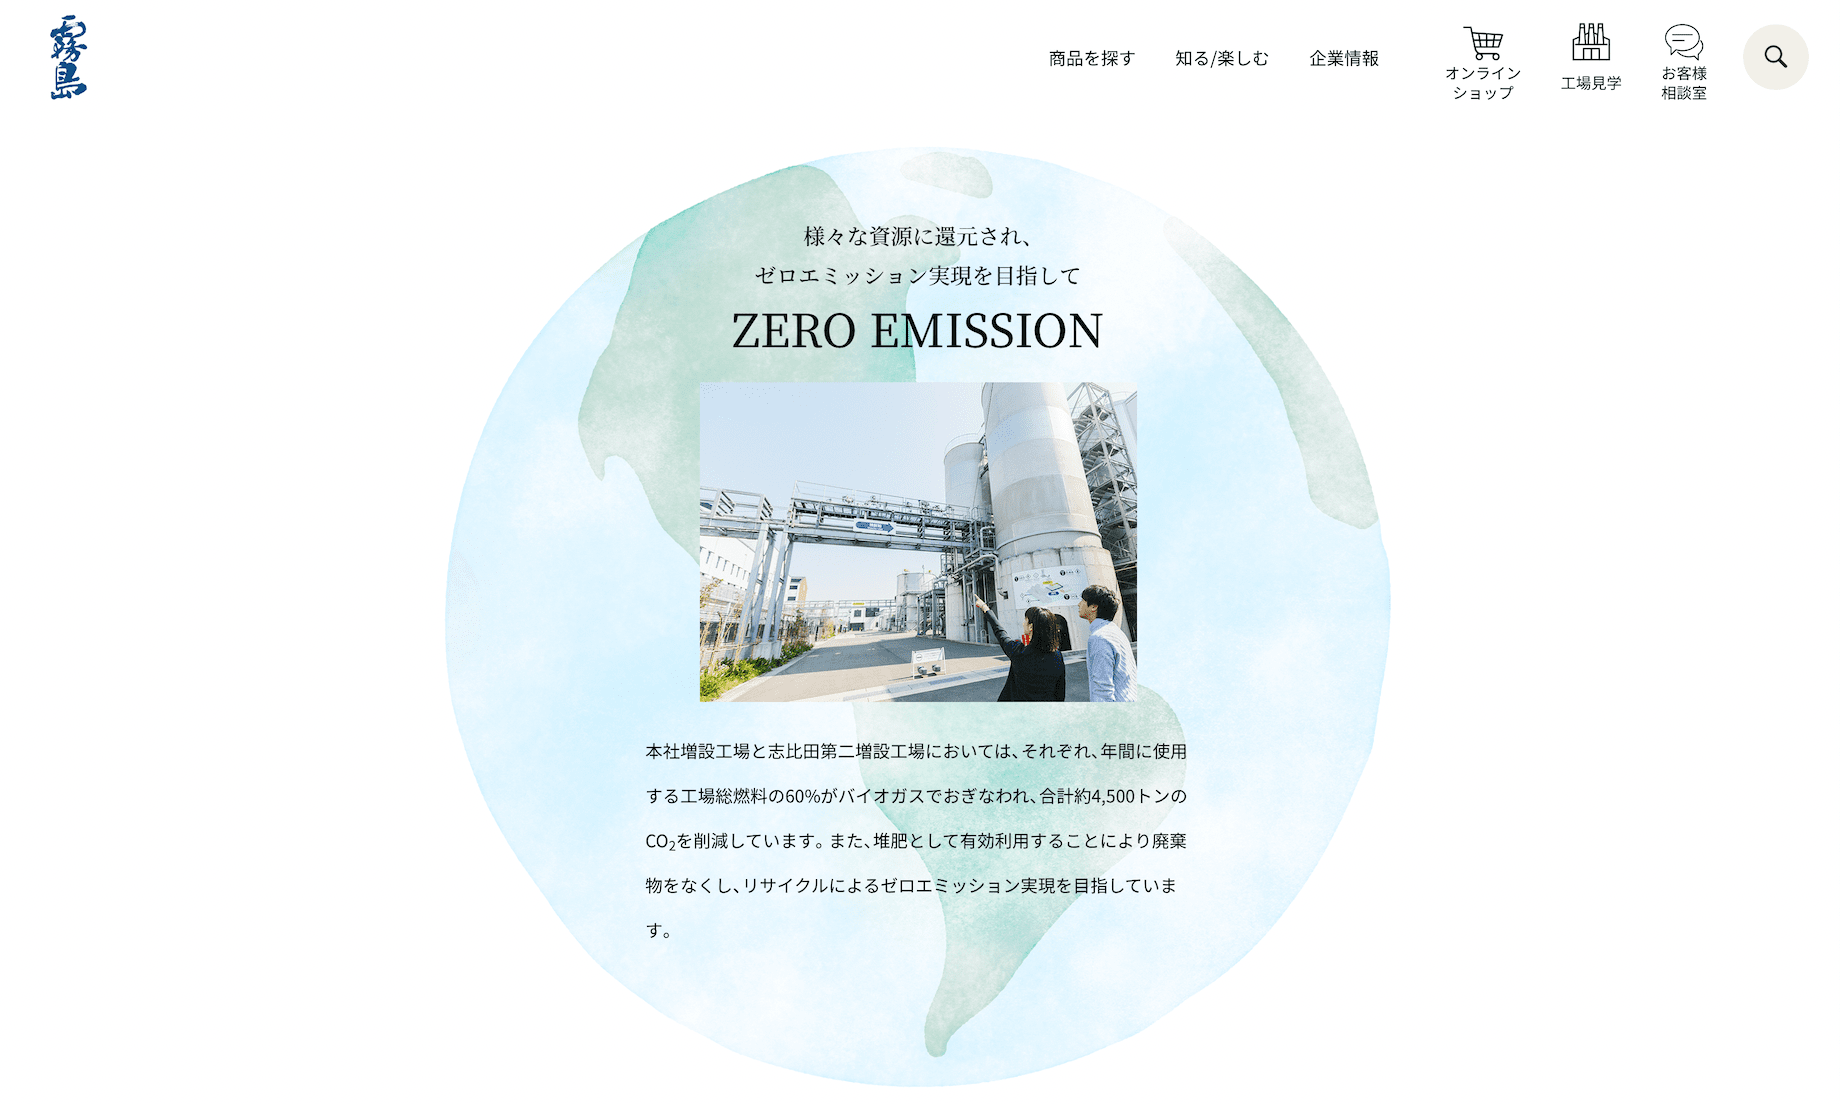 Zero emissions&nbsp; &nbsp; &nbsp; &nbsp; &nbsp; &nbsp; &nbsp; &nbsp;https://www.kirishima.co.jp